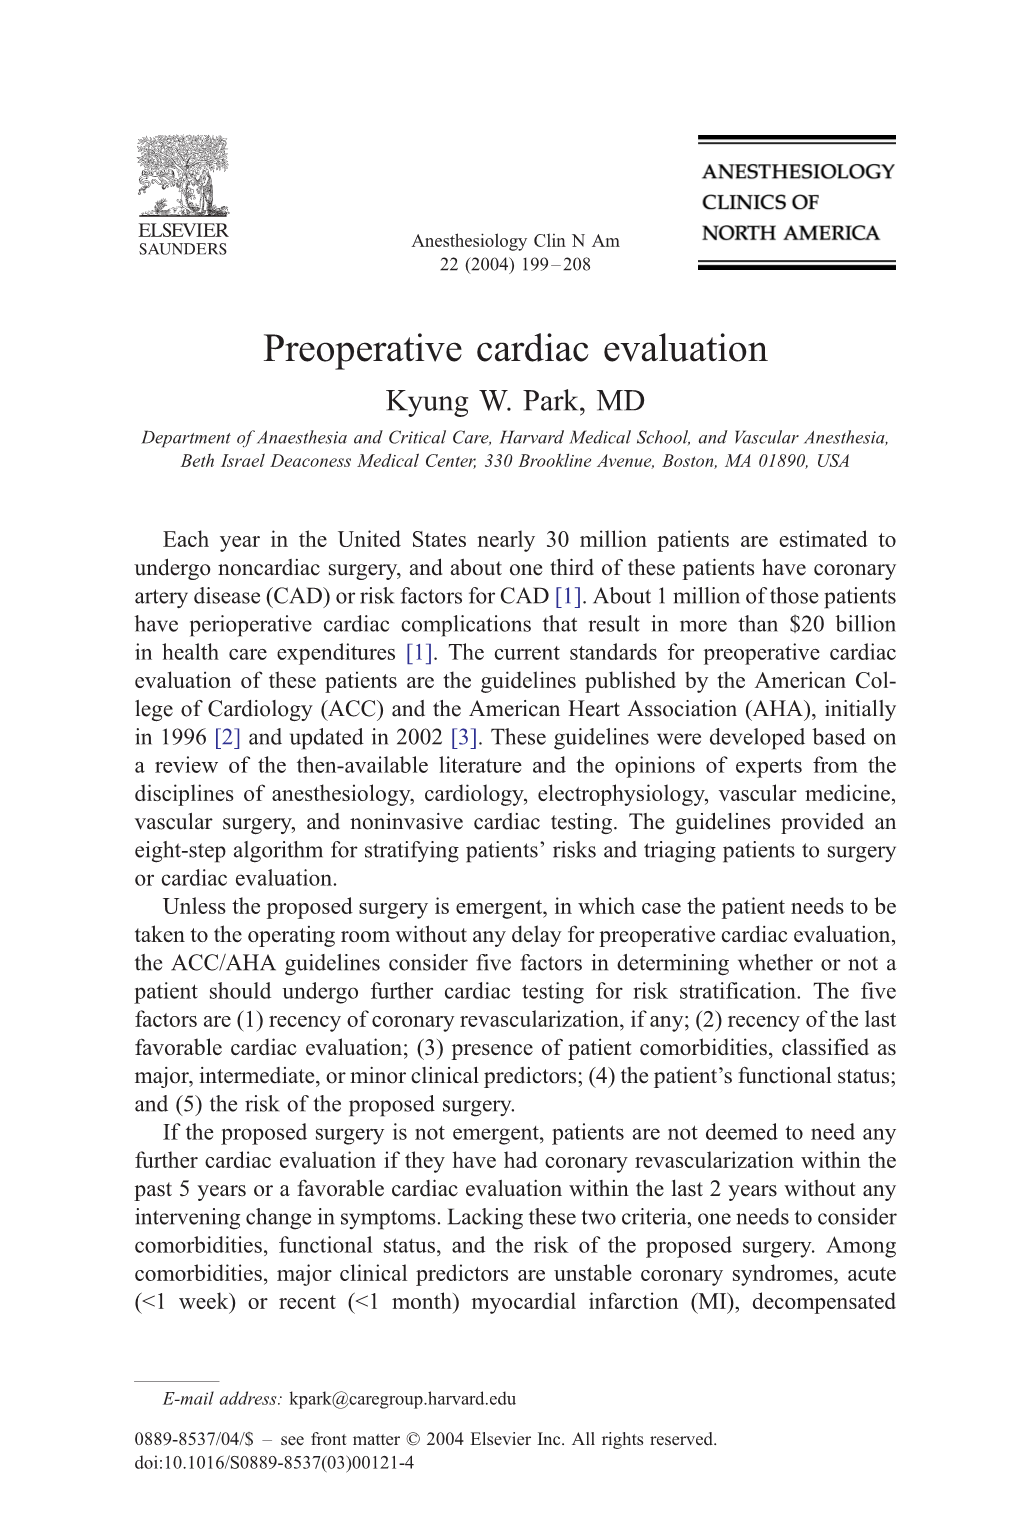 Preoperative Cardiac Evaluation Kyung W